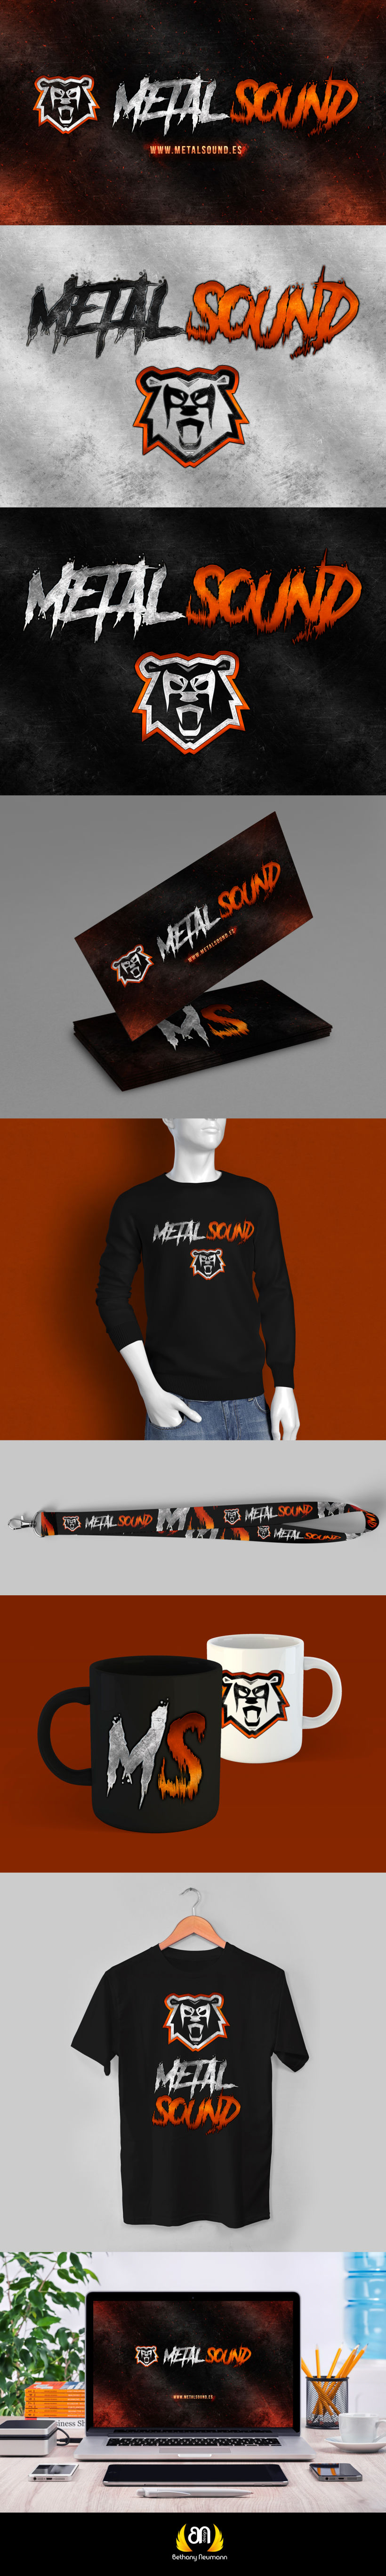 Metal Sound - Webzine -1